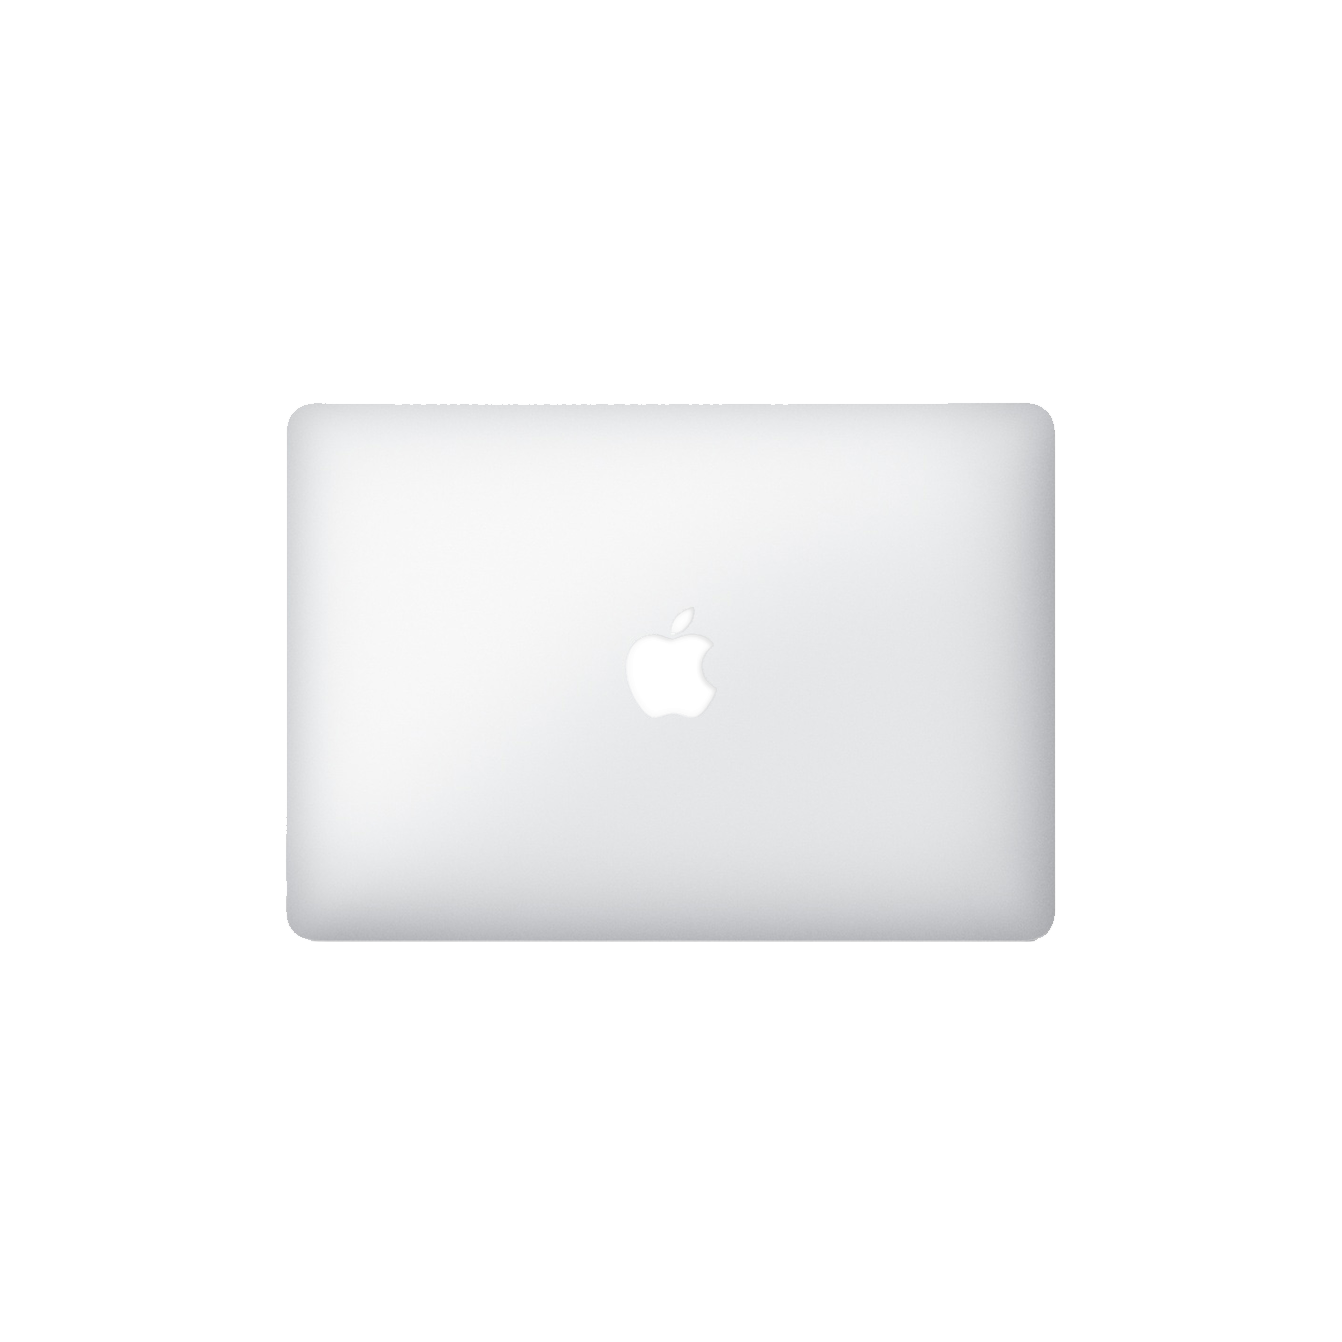 Refurbished MacBook Air 13" i7 1.6 8GB 256GB